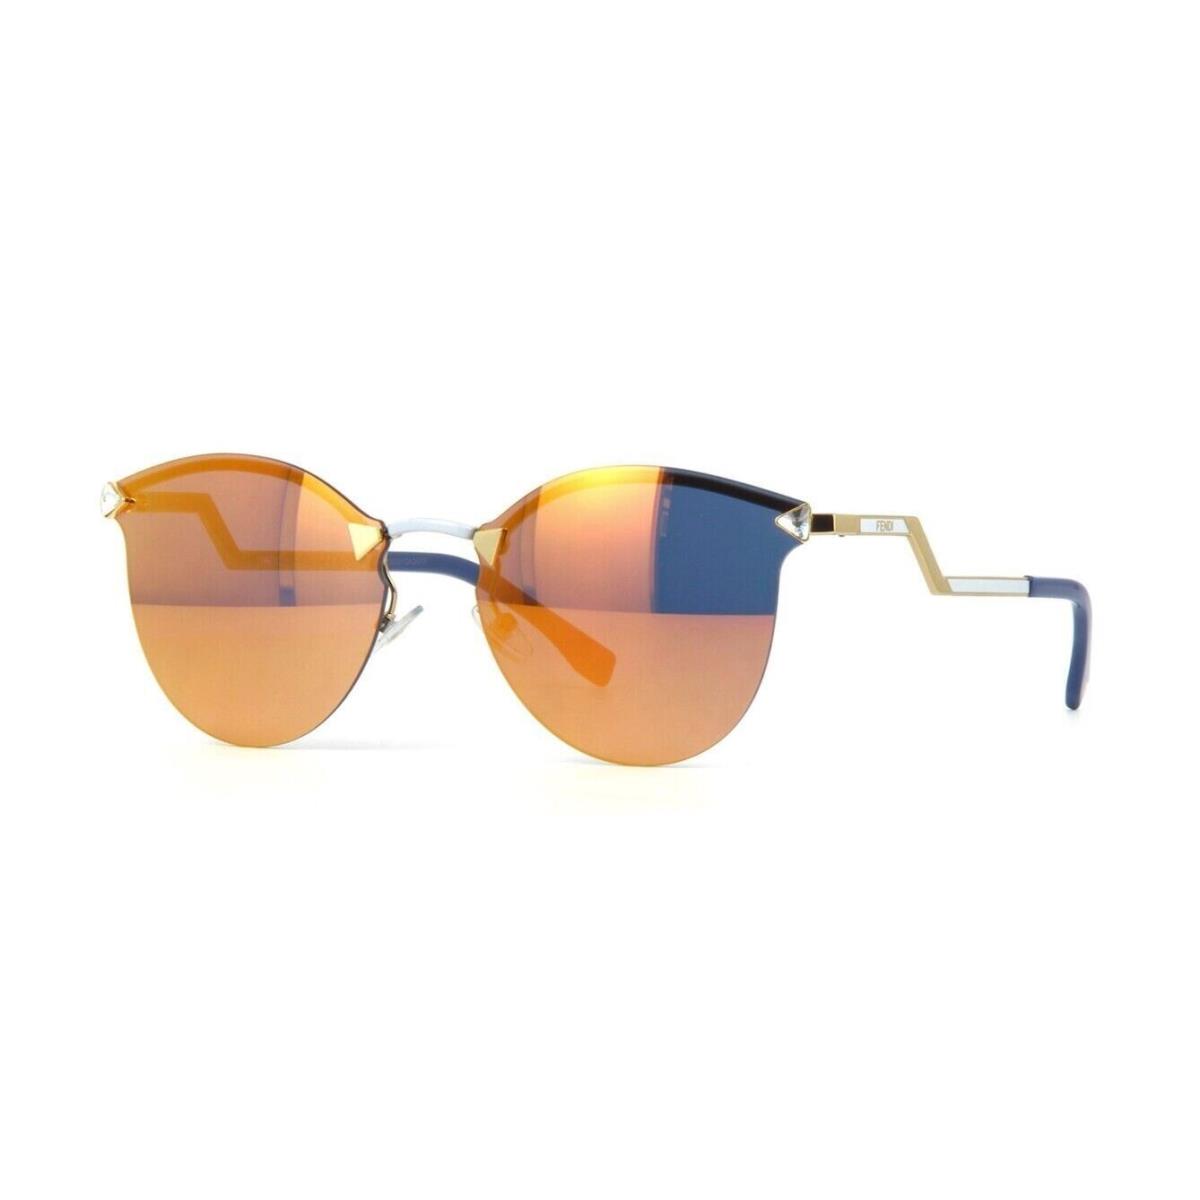 Fendi Iridia FF 0040/S Light Gold Grey/blue Gold Mirror Jfg/sq Sunglasses